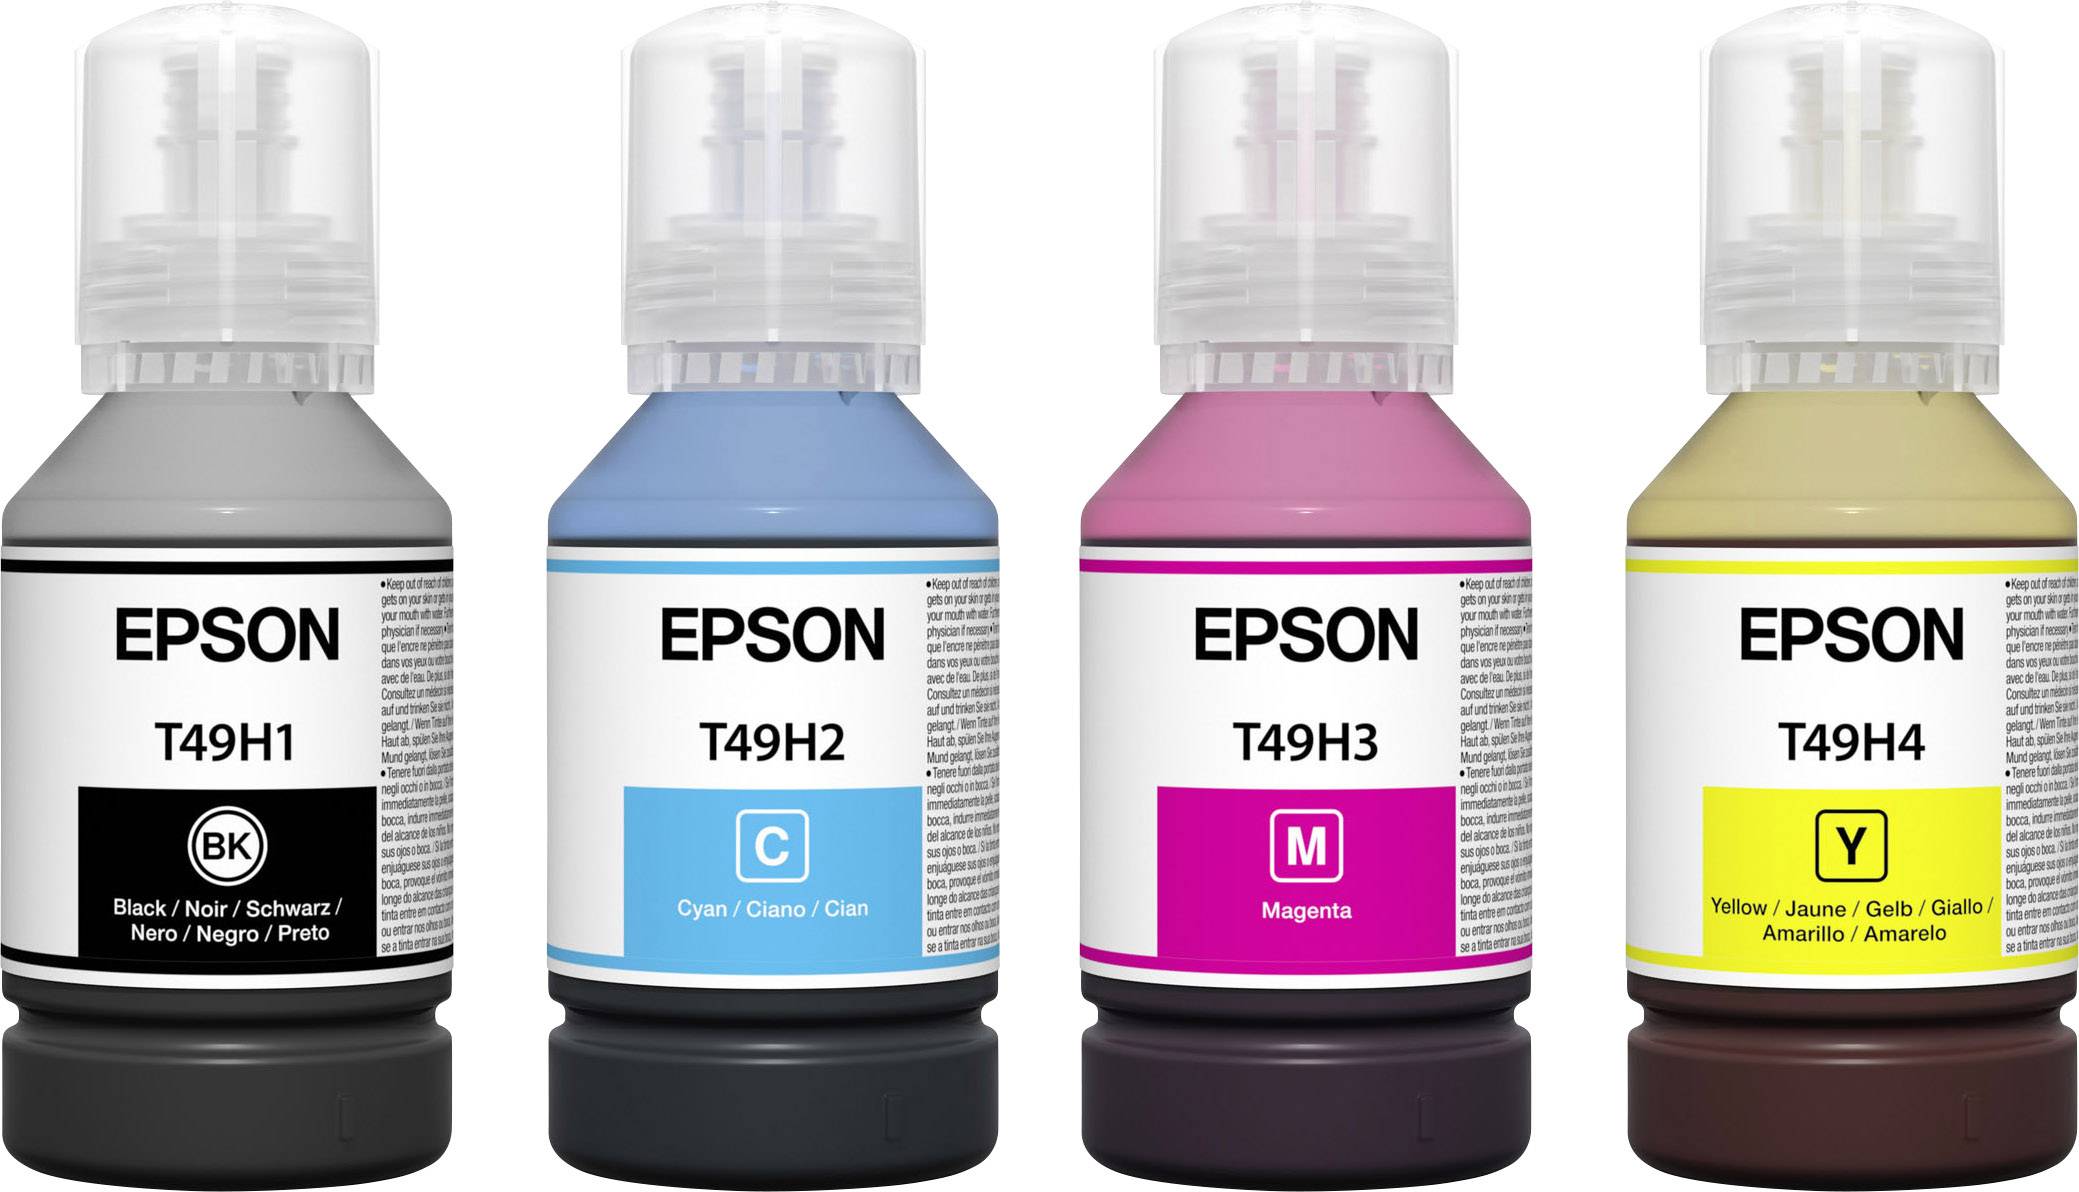 EPSON Ink/SC-T3100x Magenta